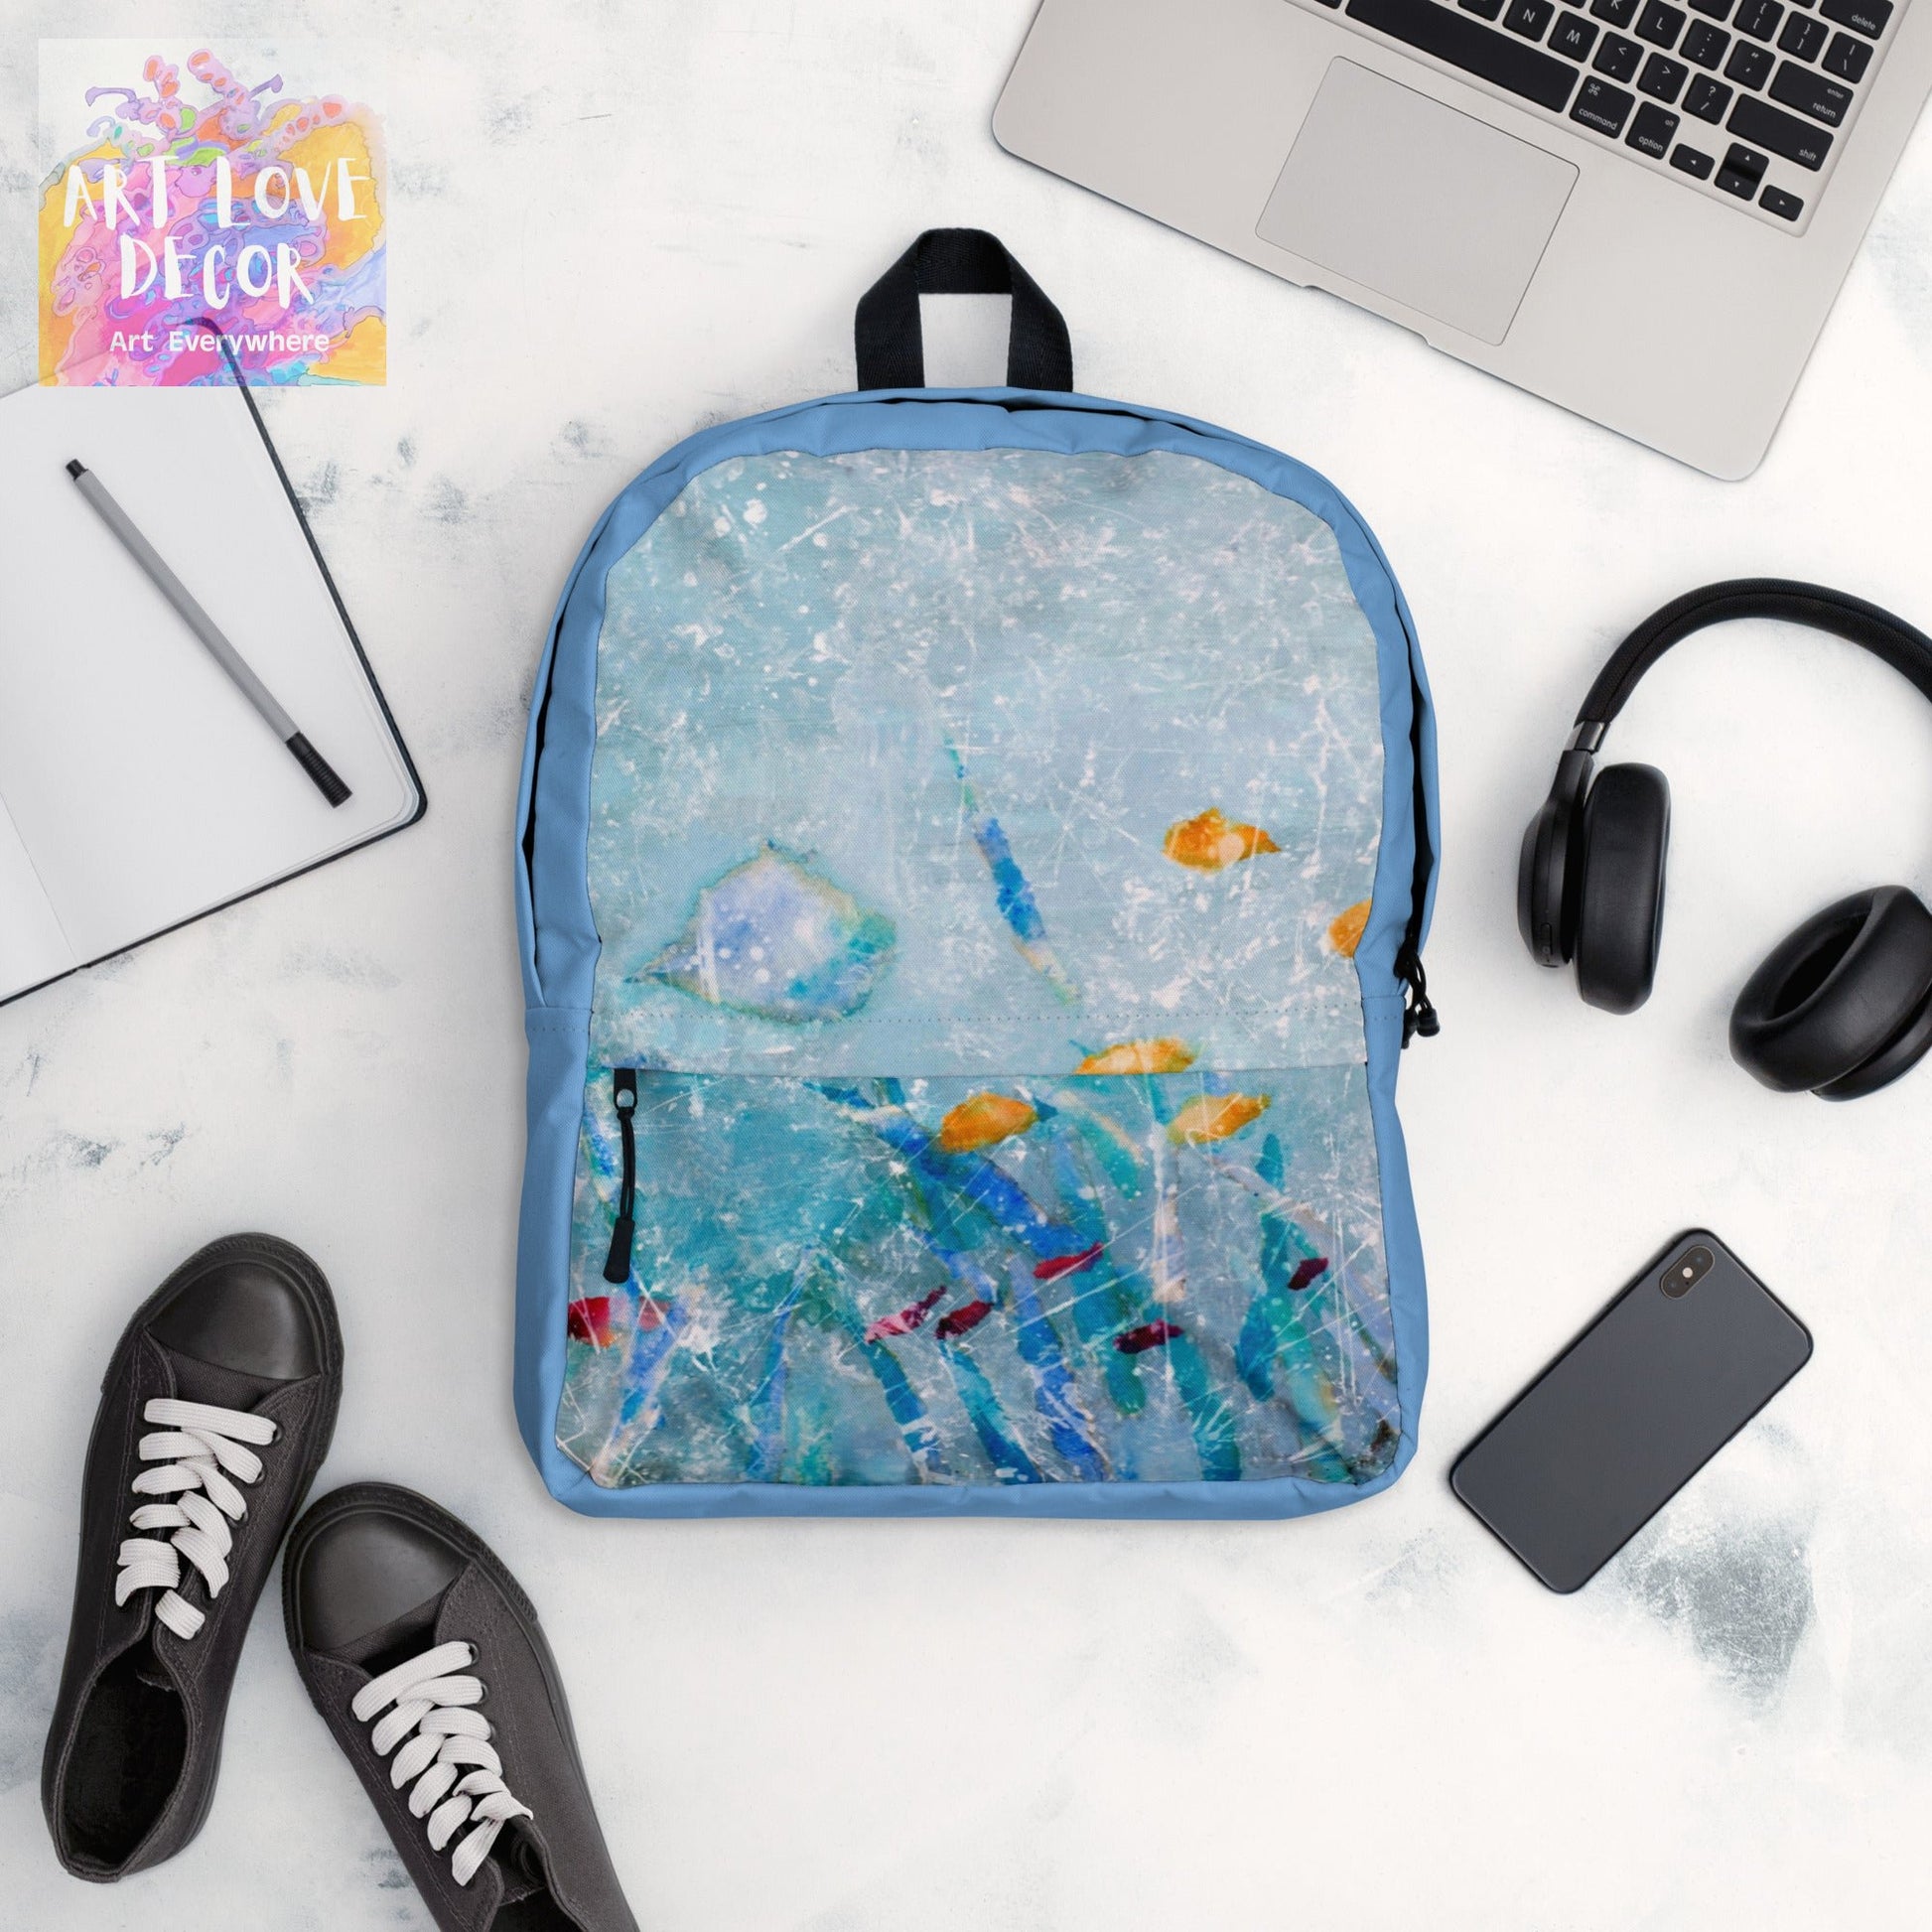 Aqua Sea Abstract Backpack - Art Love Decor